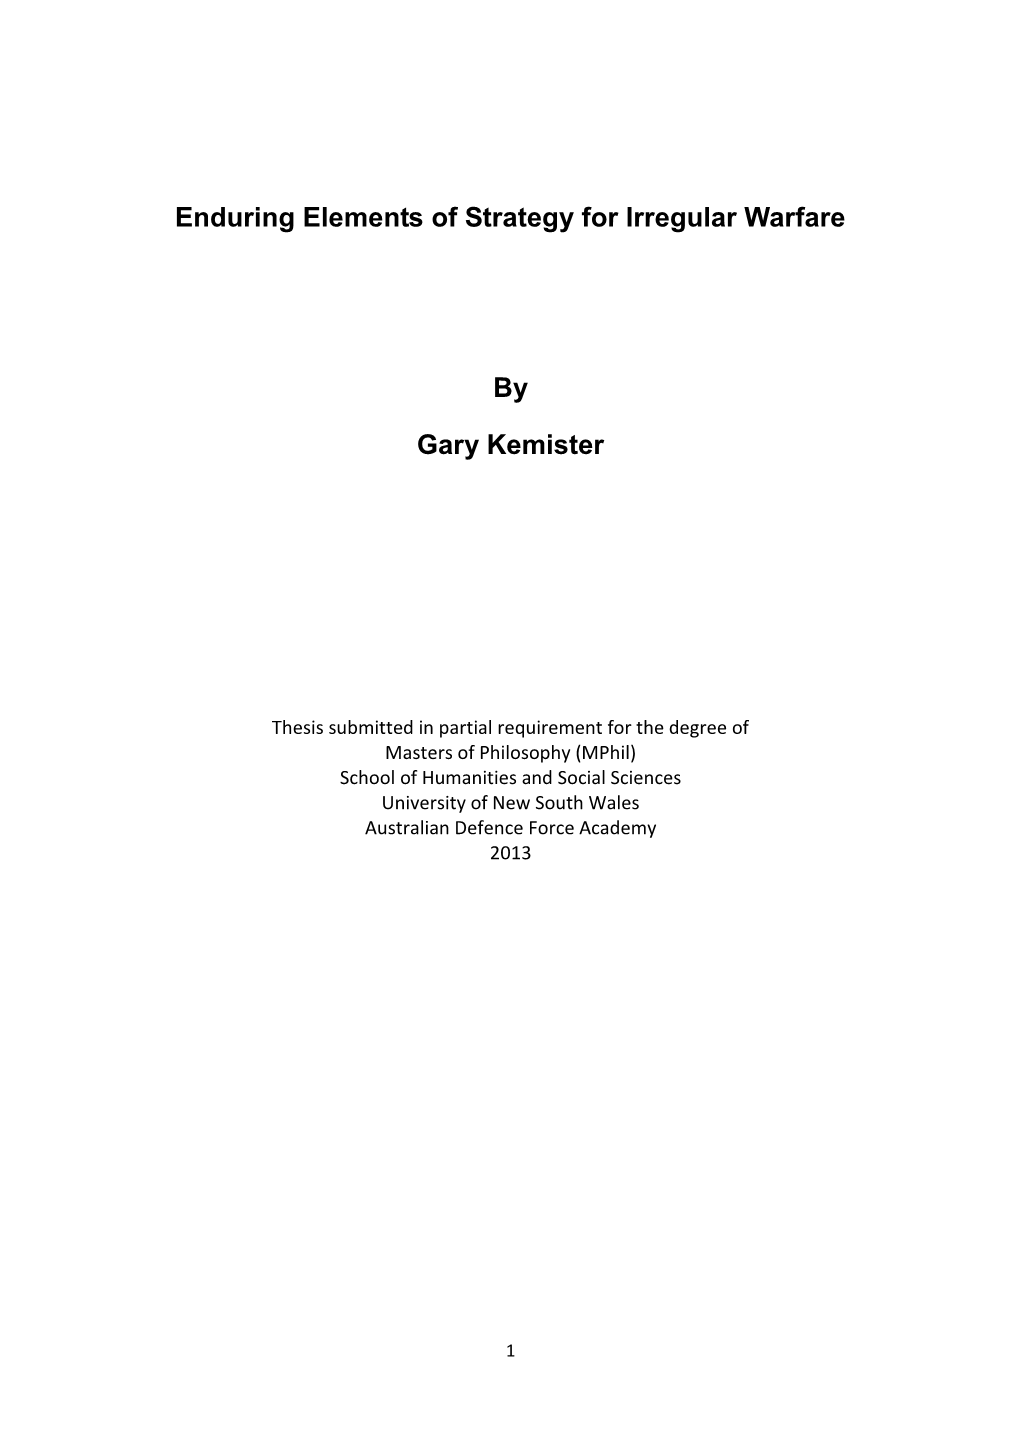 Chapter 1 Short History of Regular War with Interspersed Theories of Regular War (20Pgs)